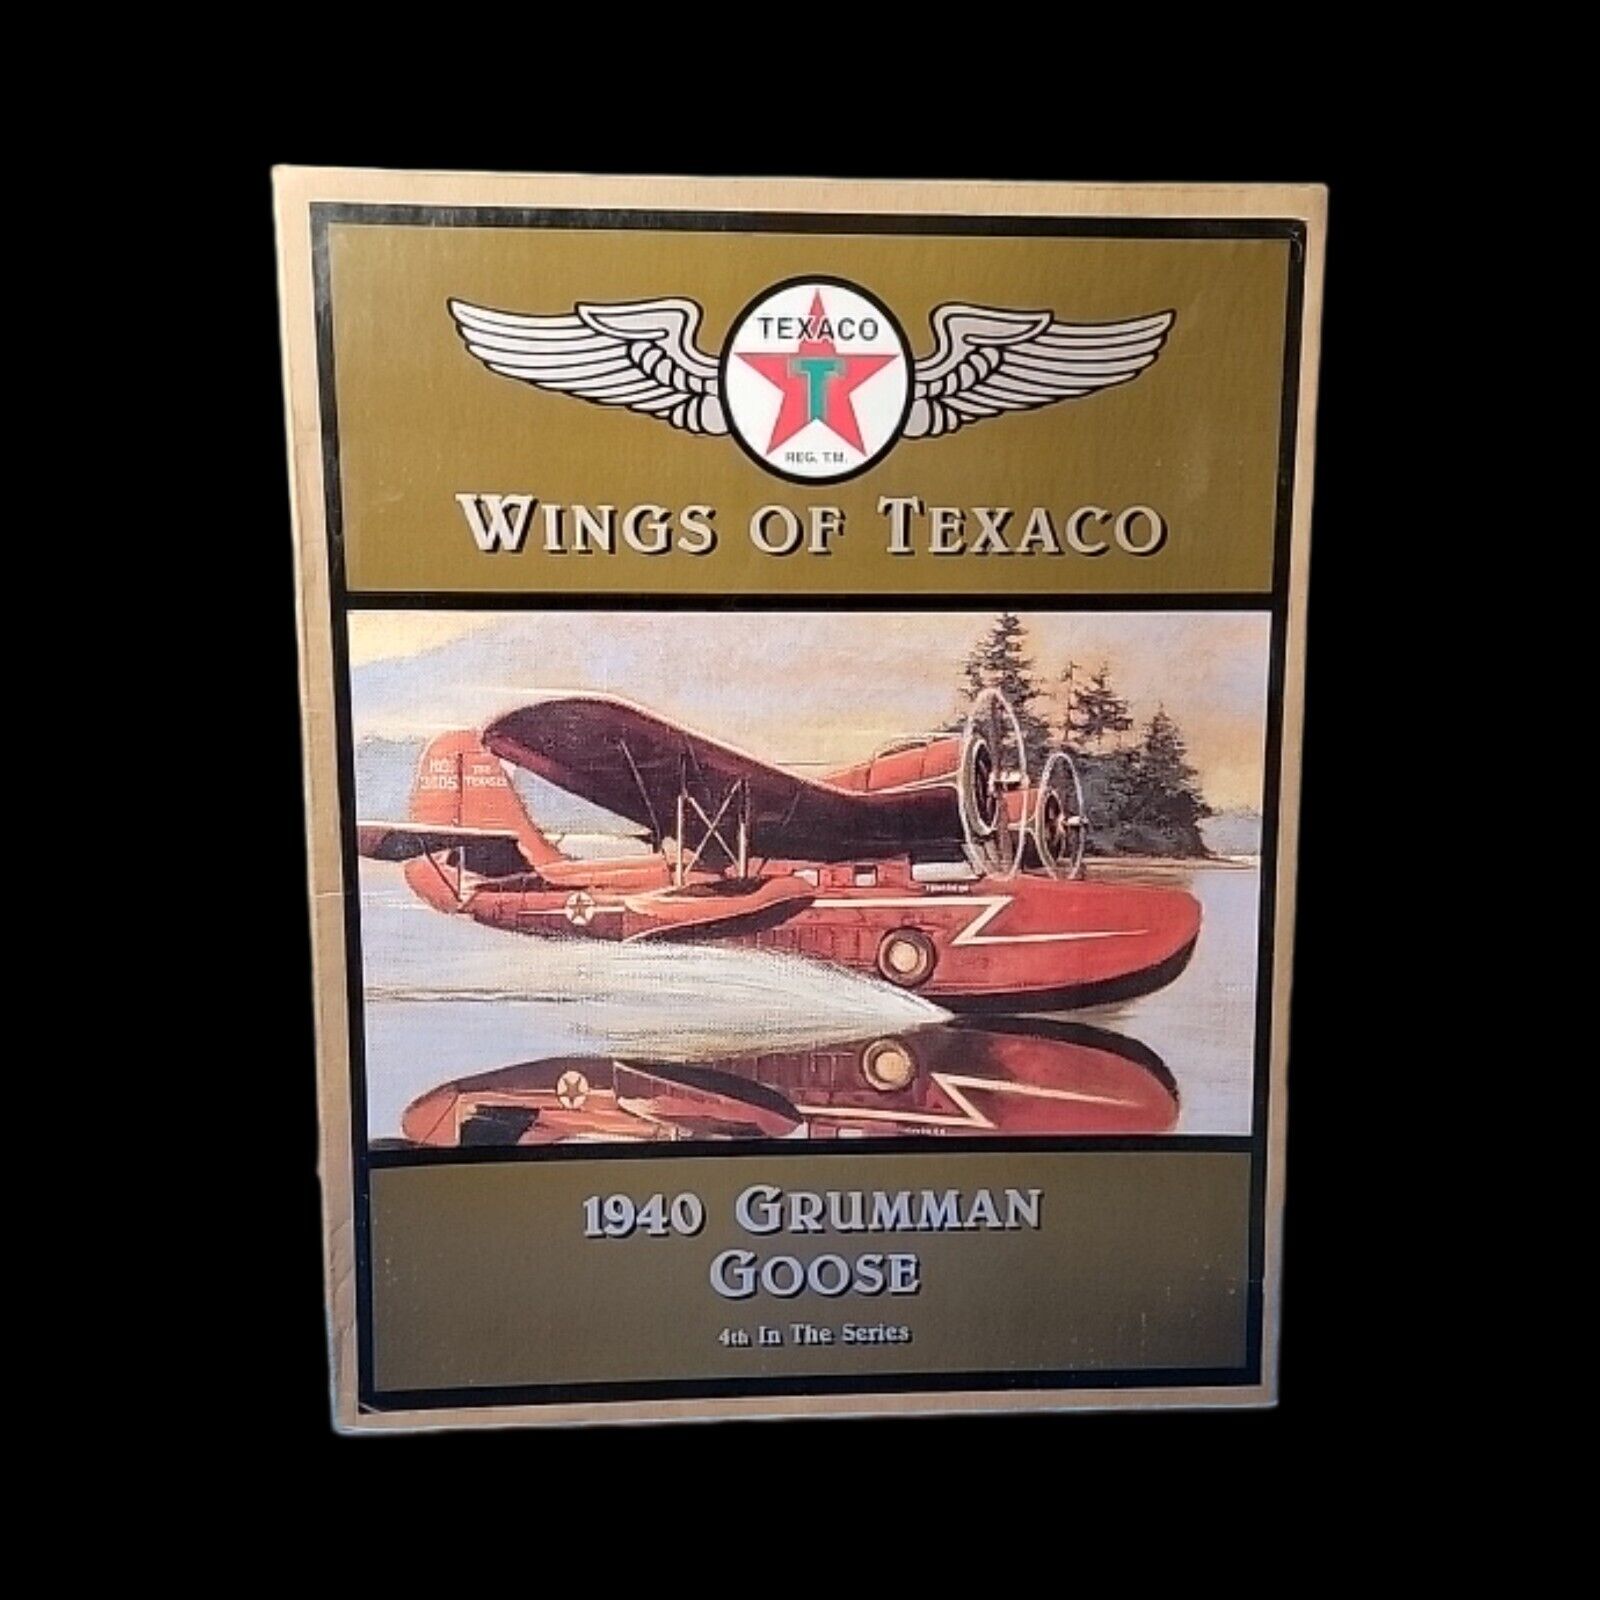 Ertl F900 Wings of Texaco 1940 Grumman Goose Airplane Coin Bank - New In Box 4th